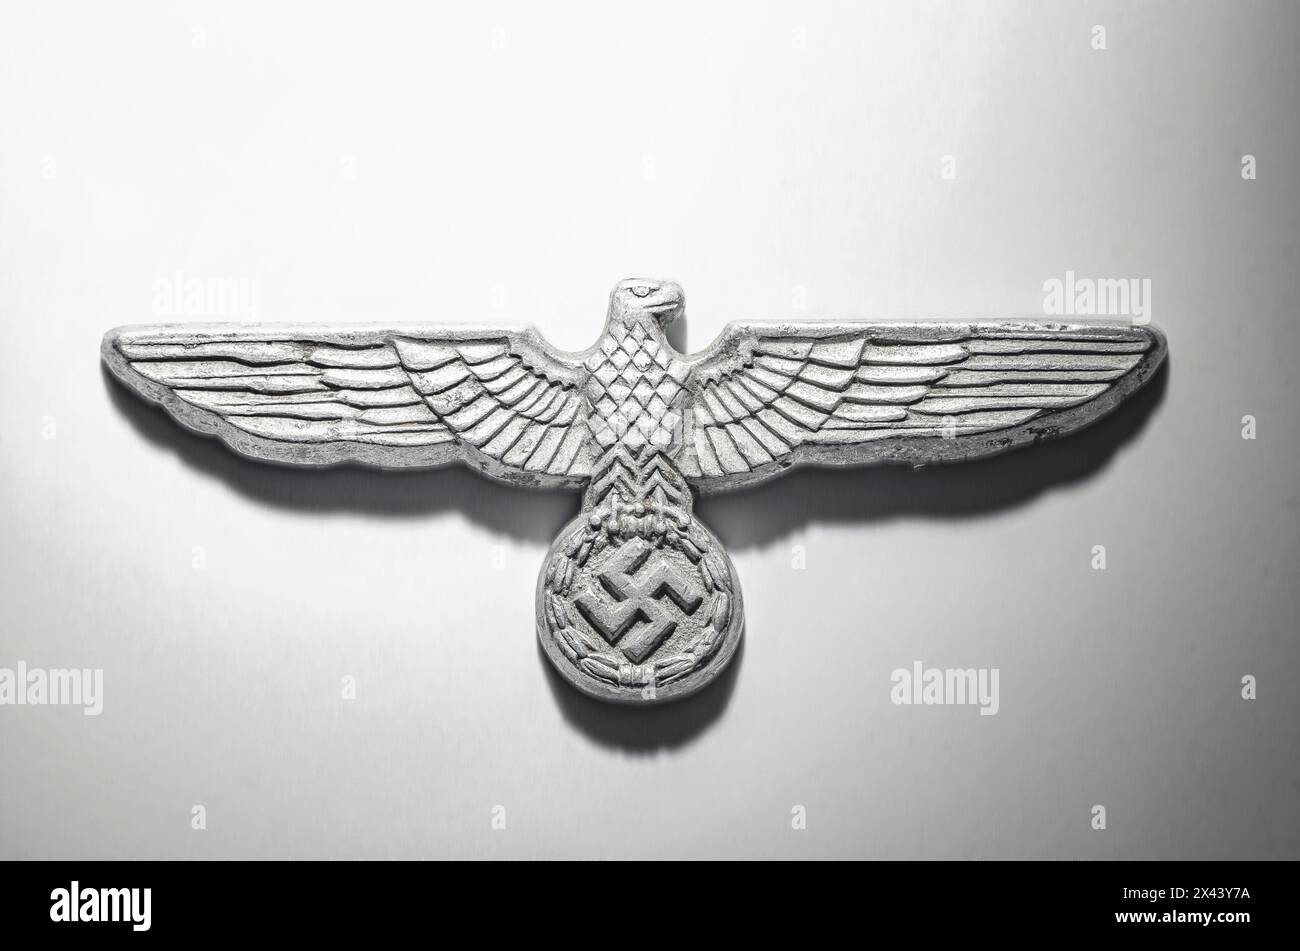 World War Two German nazi hat badge on white light background Stock Photo